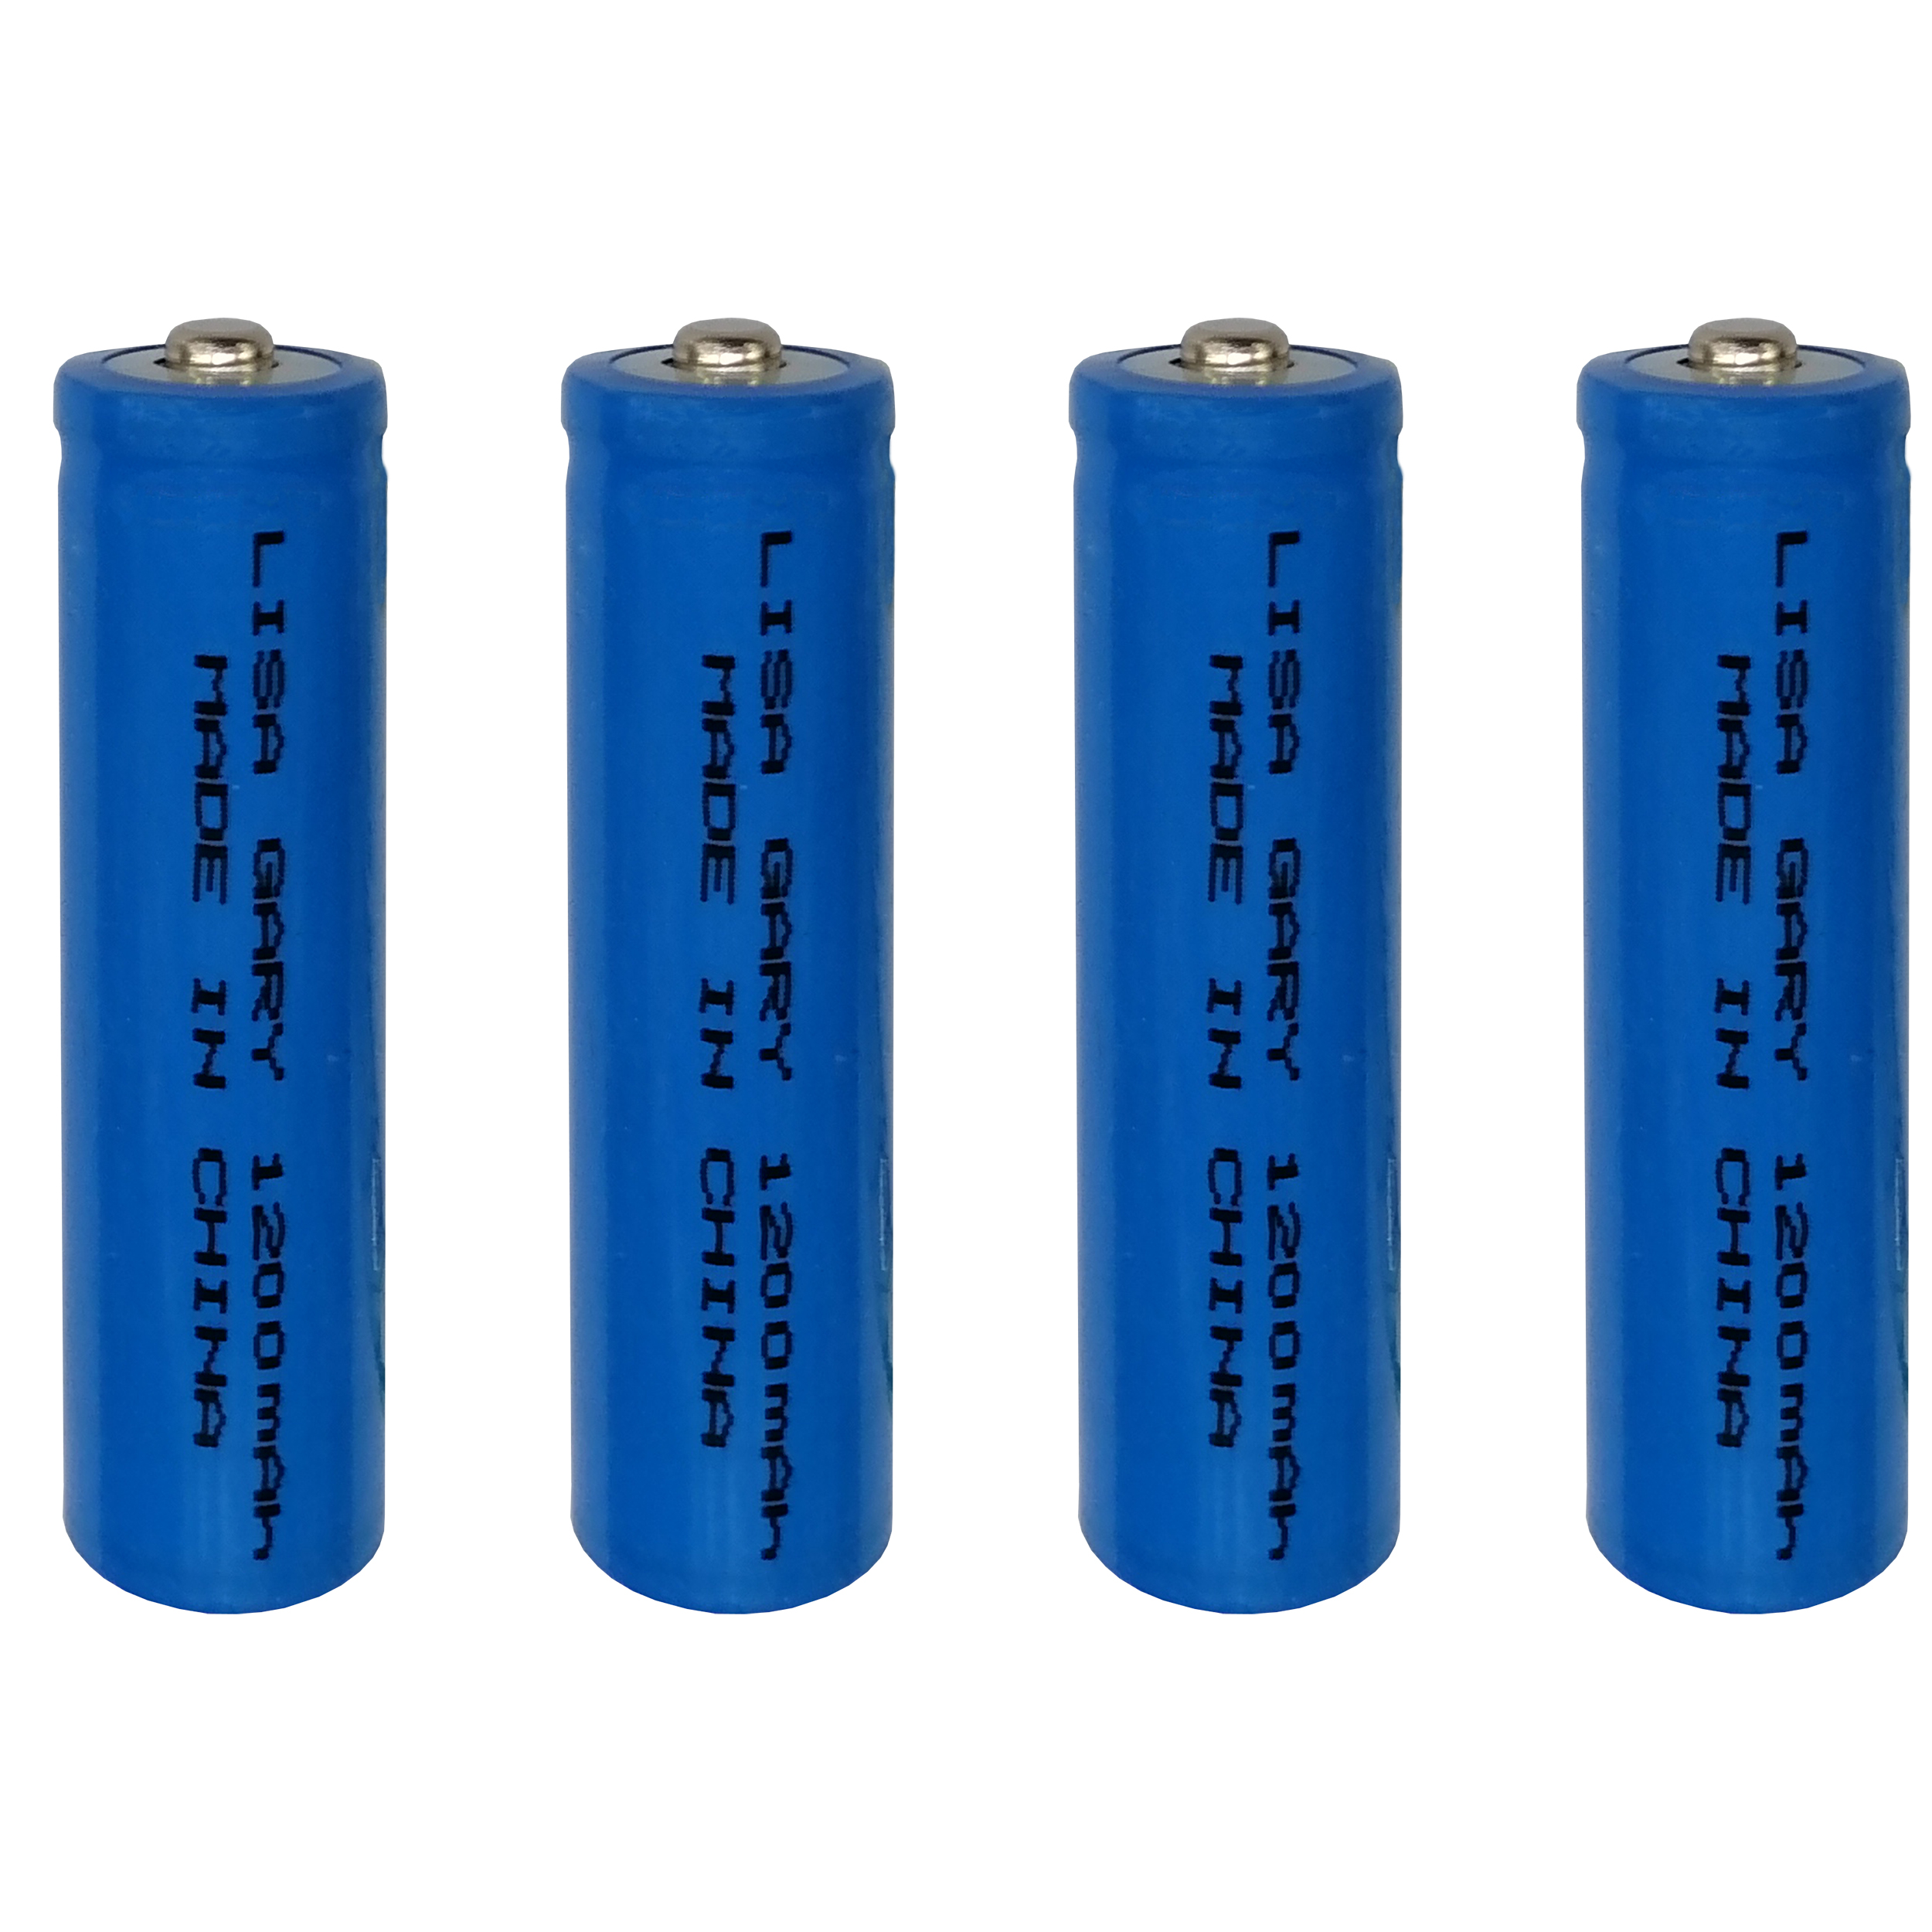 باتری لیتیوم یون قابل شارژ مدل 18650 LISA GARY ظرفیت 1200 میلی آمپر ساعت بسته 4 عددی